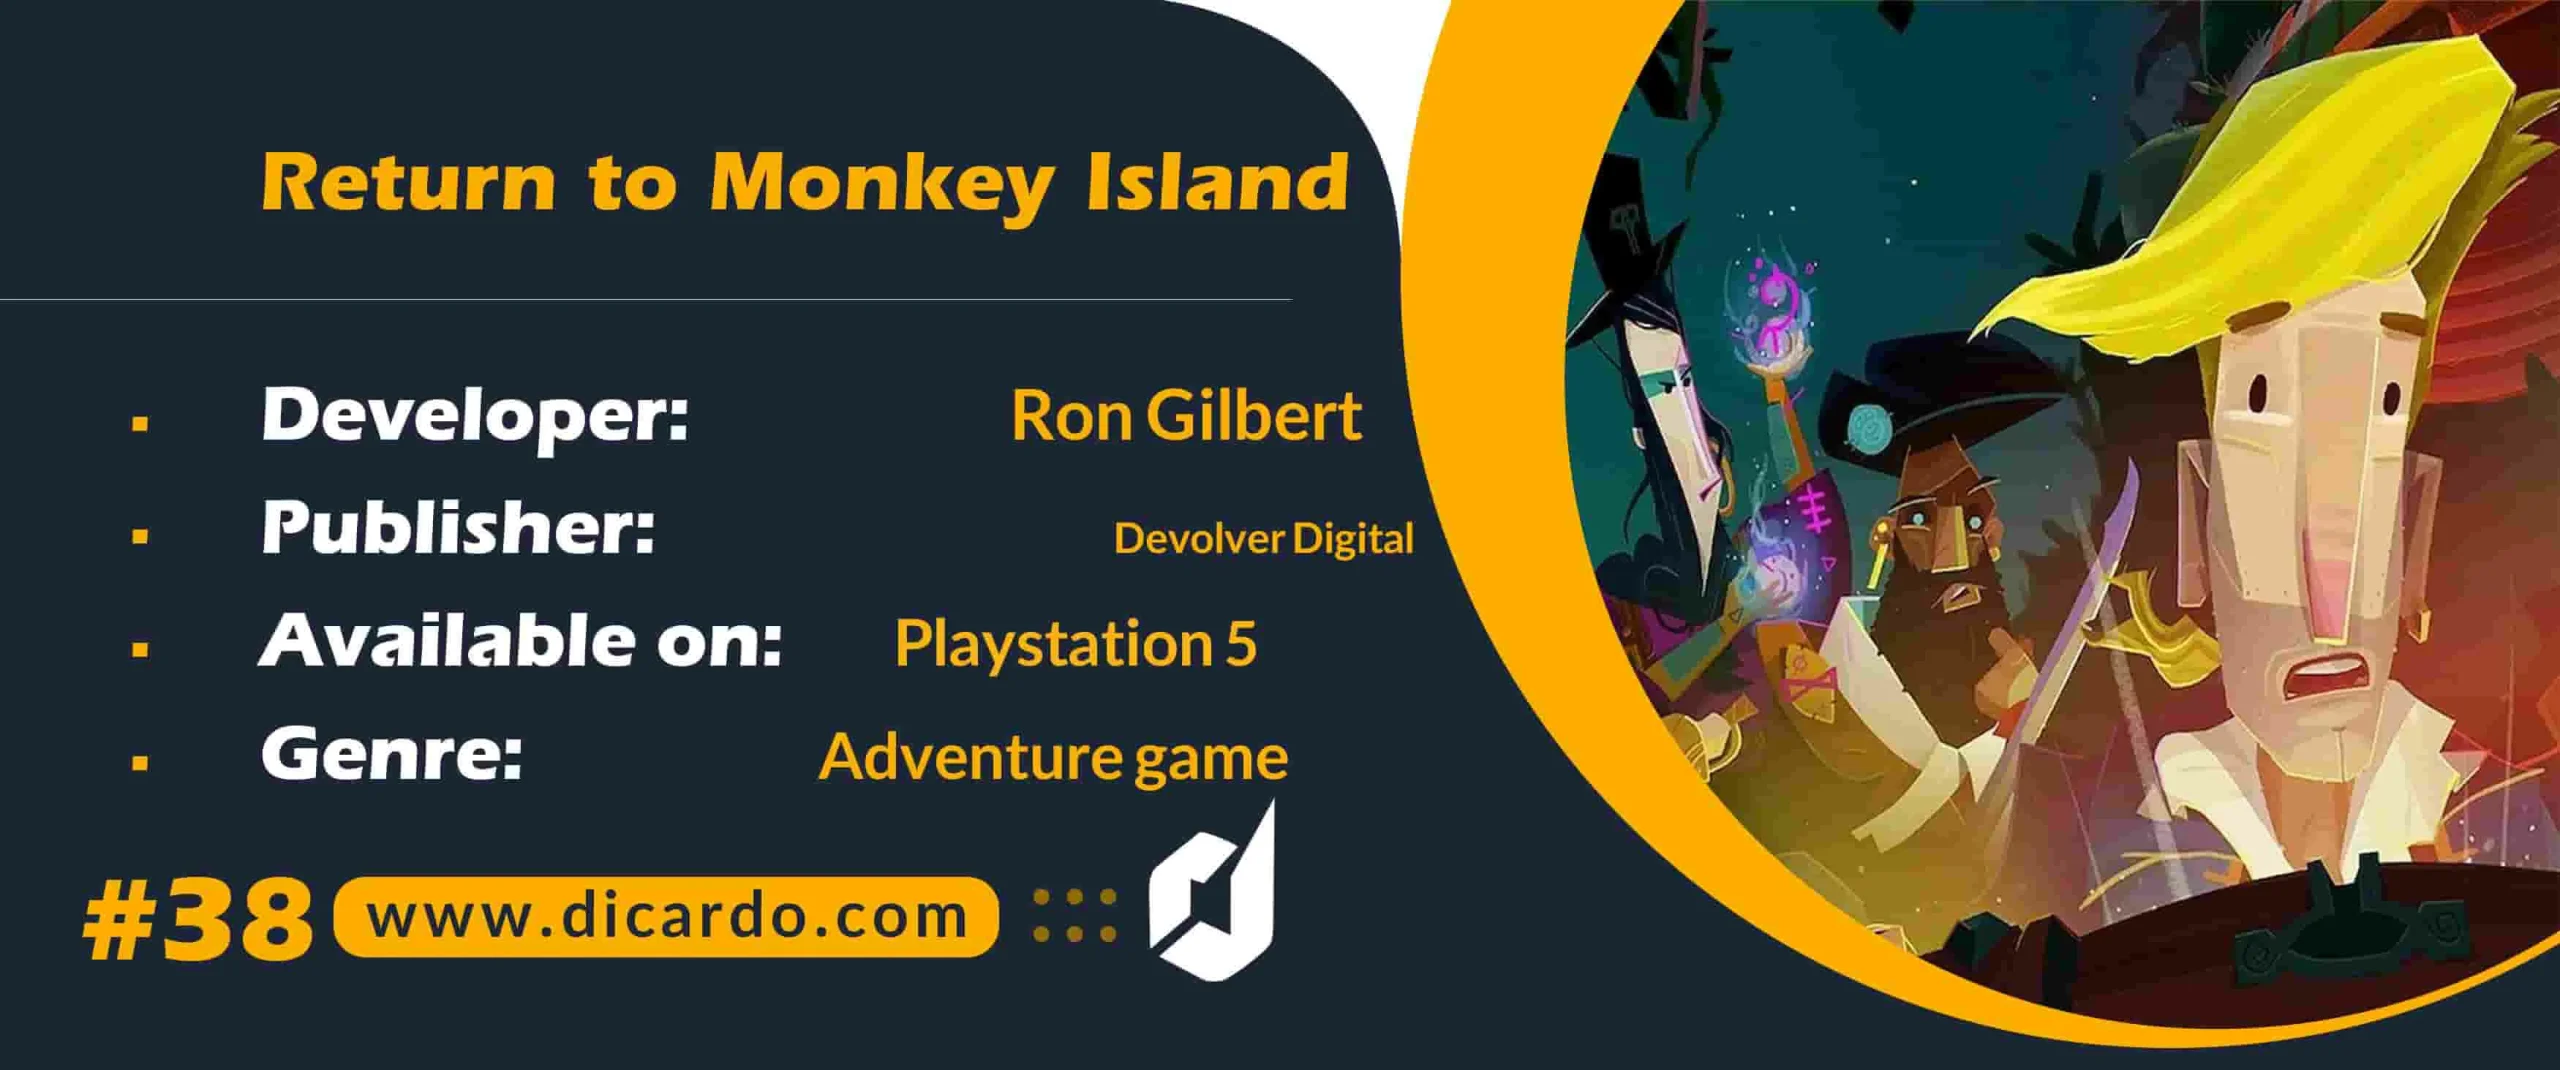 #38 ریتورن تو مانکی ایلند Return to Monkey Island